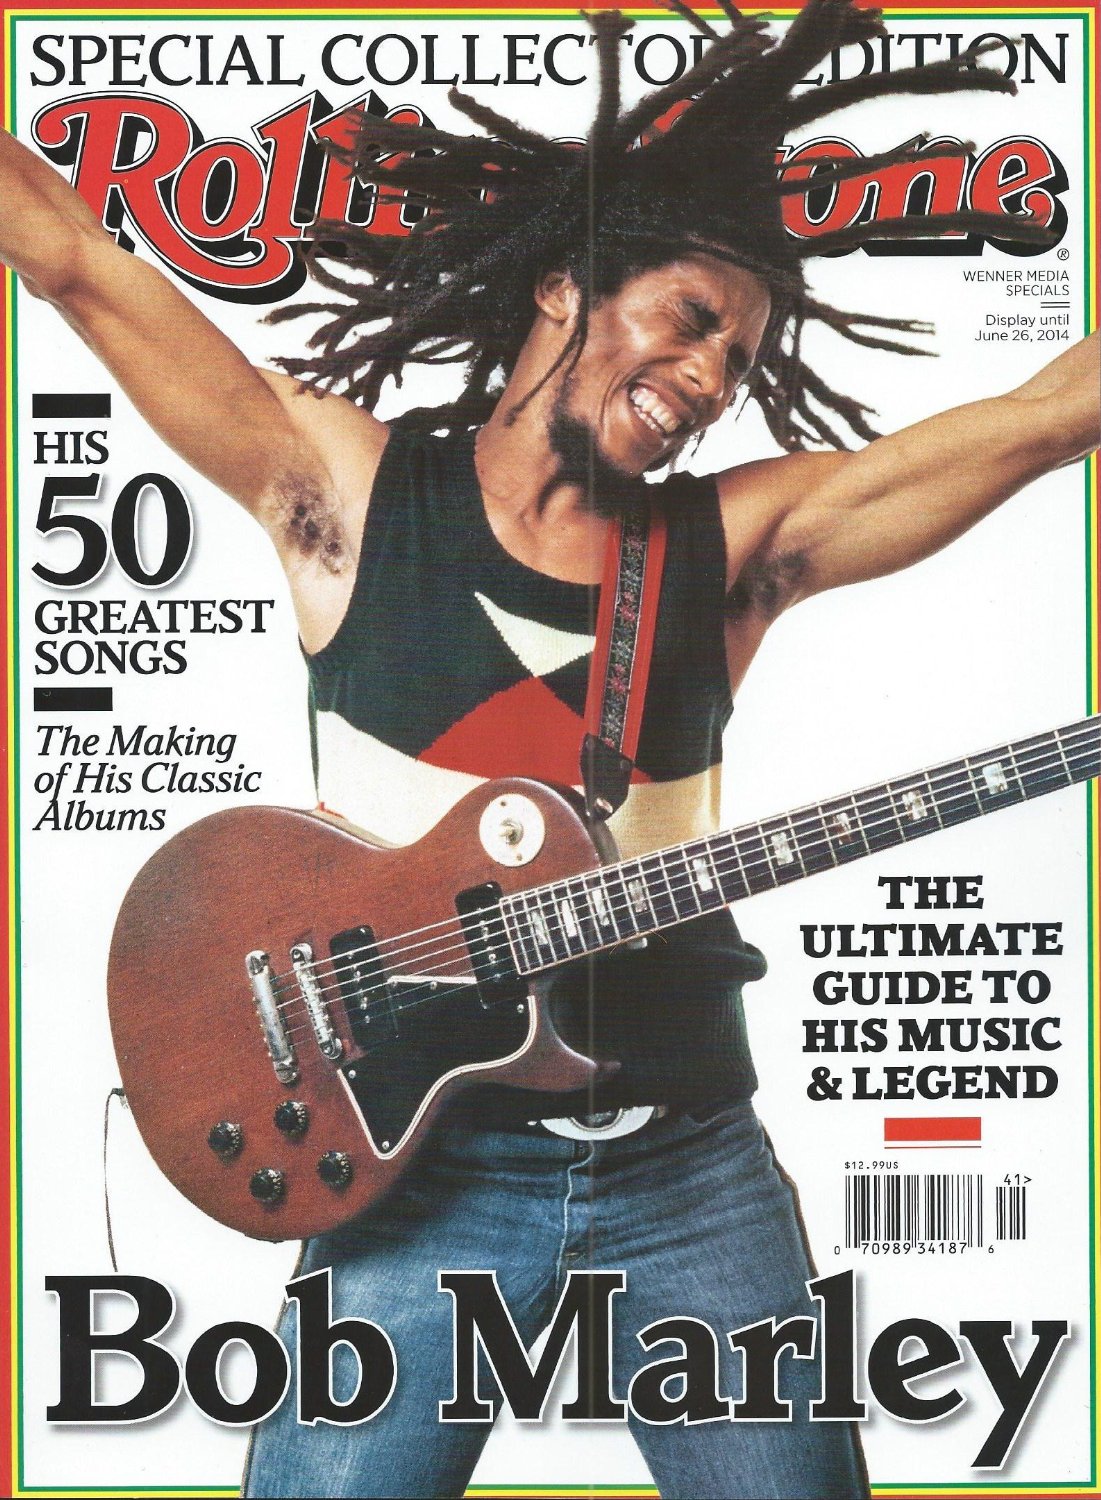 Bob Marley’s 50 greatest songs according to Rolling Stone Magazine | Reggaemani